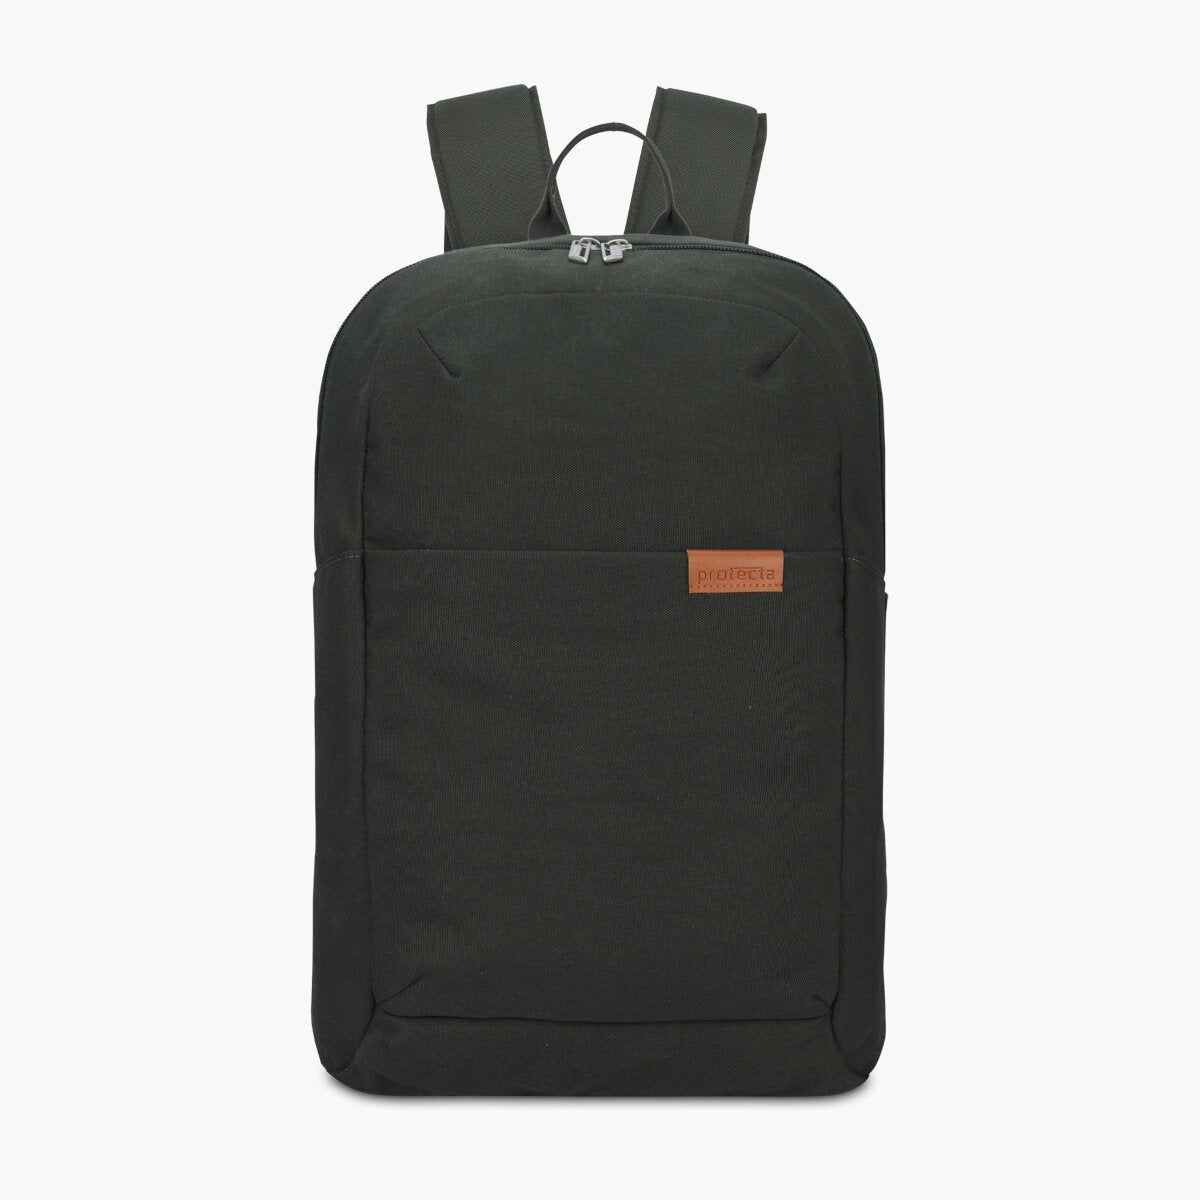 Green | Protecta Strong Buzz Laptop Backpack - Main